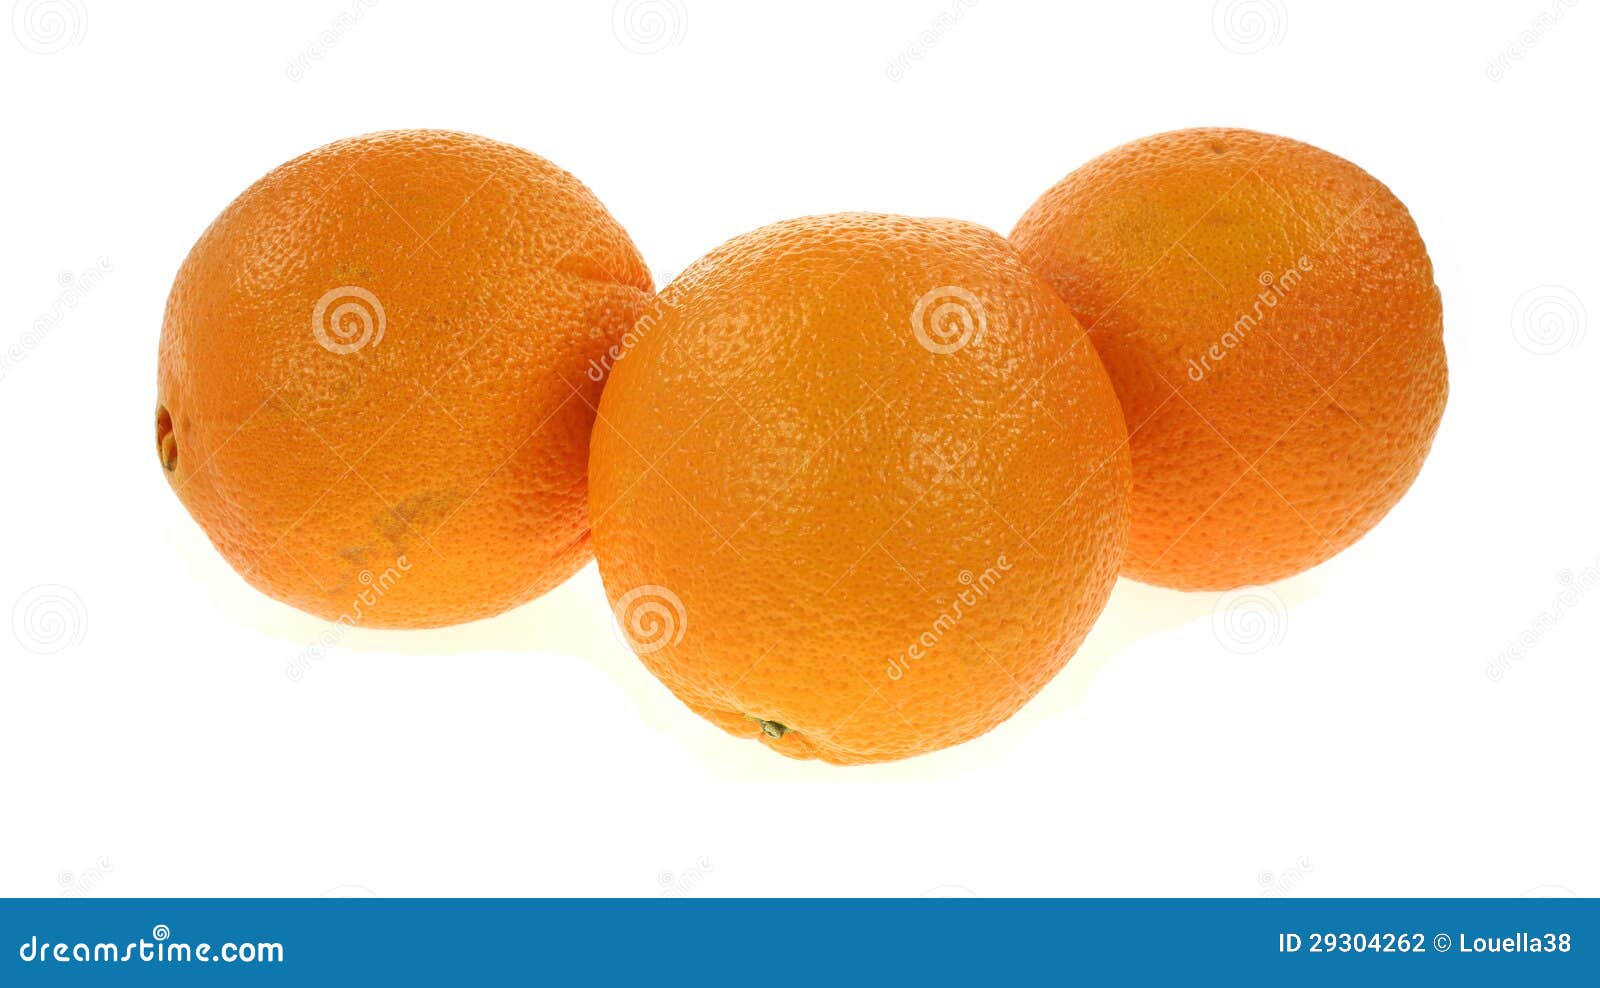 cara cara jumbo navel oranges